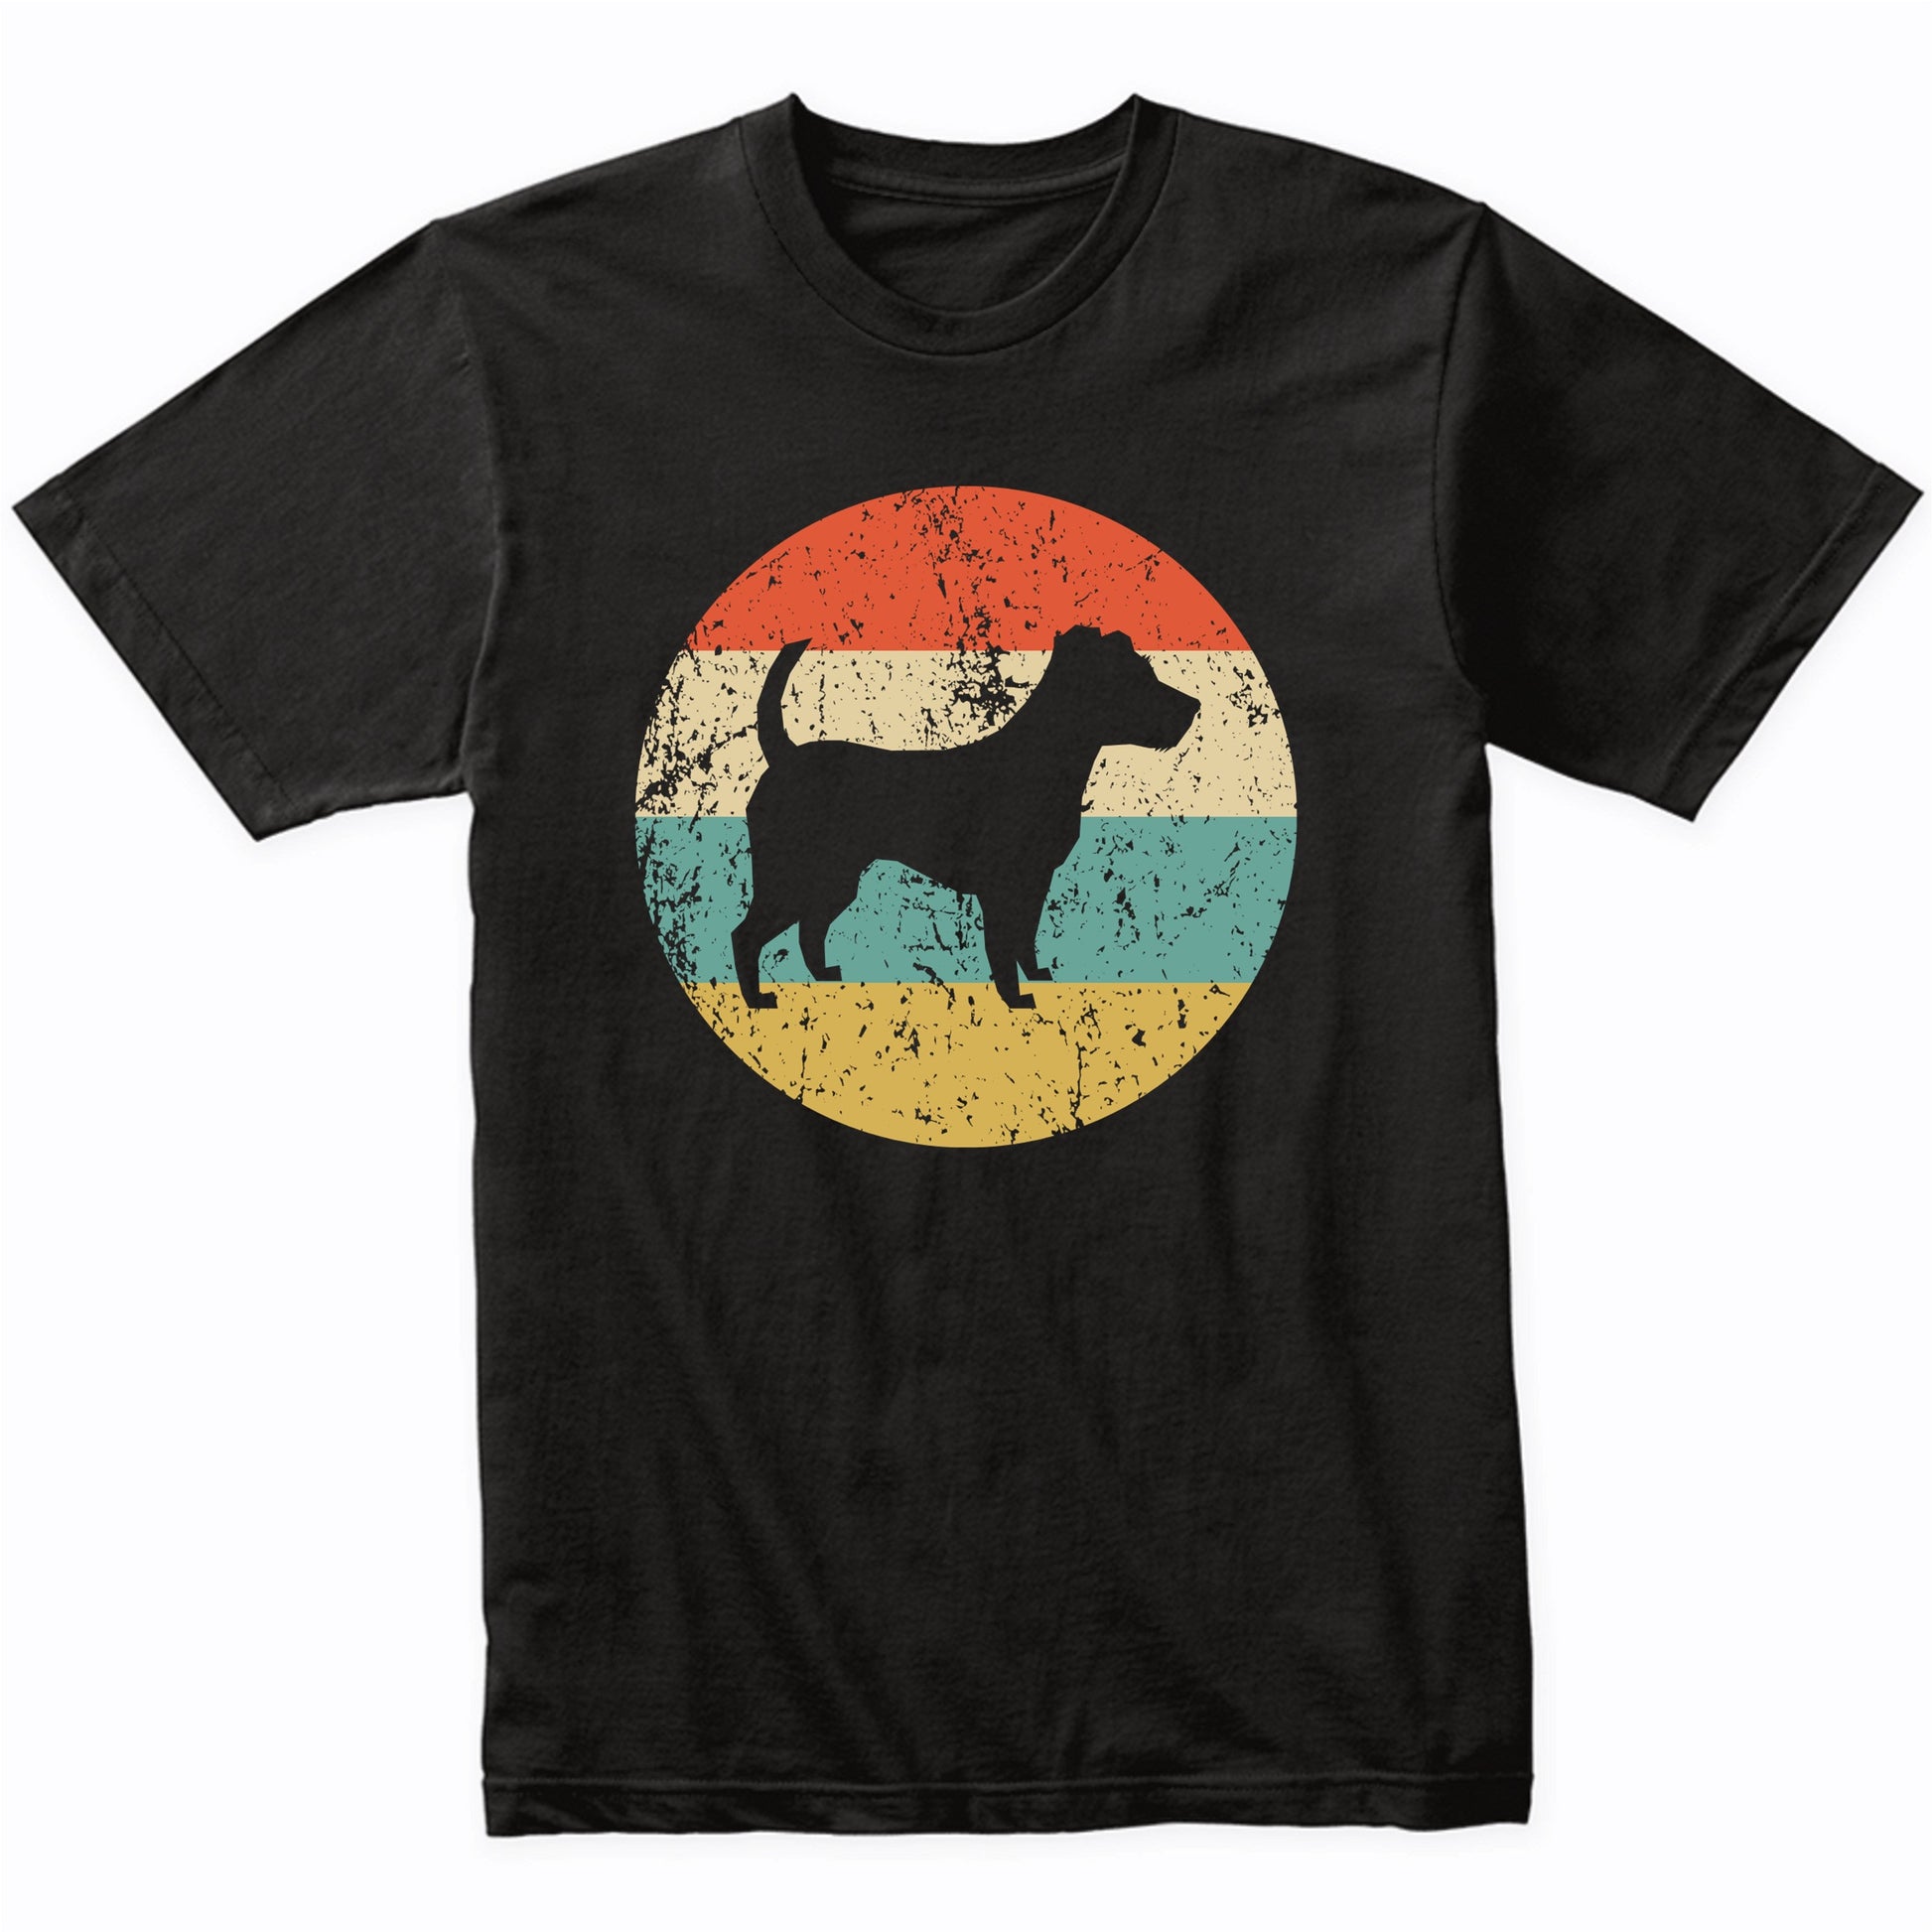 Jack Russell Terrier Shirt - Vintage Retro Dog T-Shirt